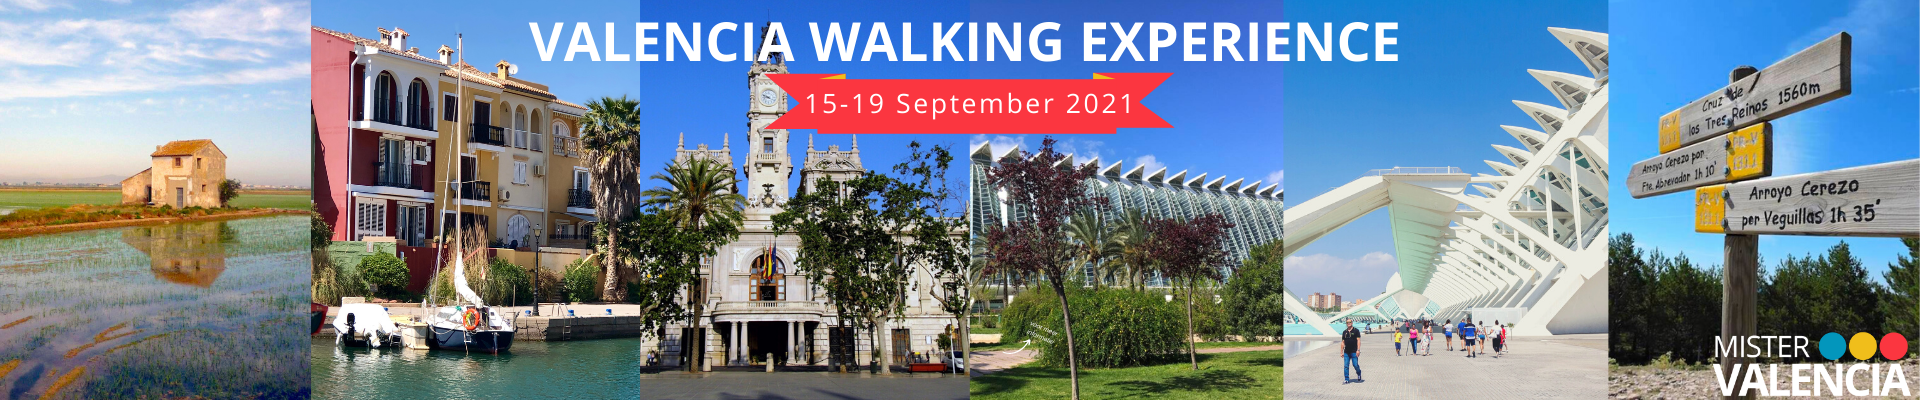 Valencia Walking Experience Sept 2021 (English)